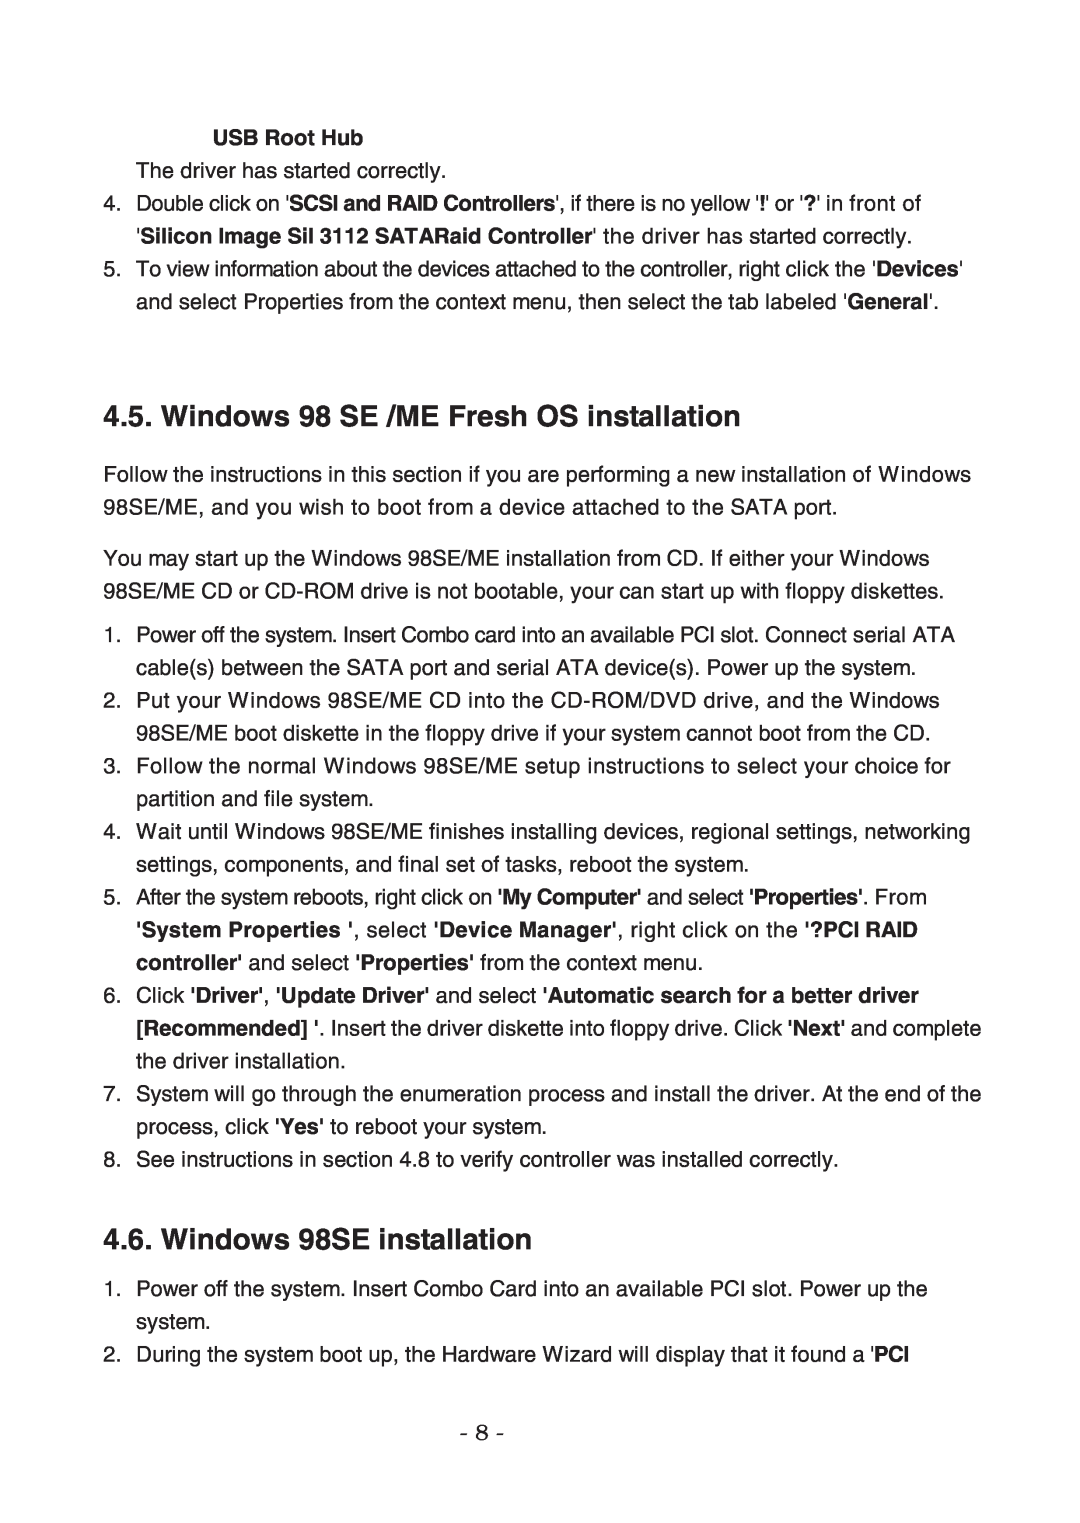 Lindy 70536 user manual Windows 98 SE /ME Fresh OS installation, Windows 98SE installation, USB Root Hub 